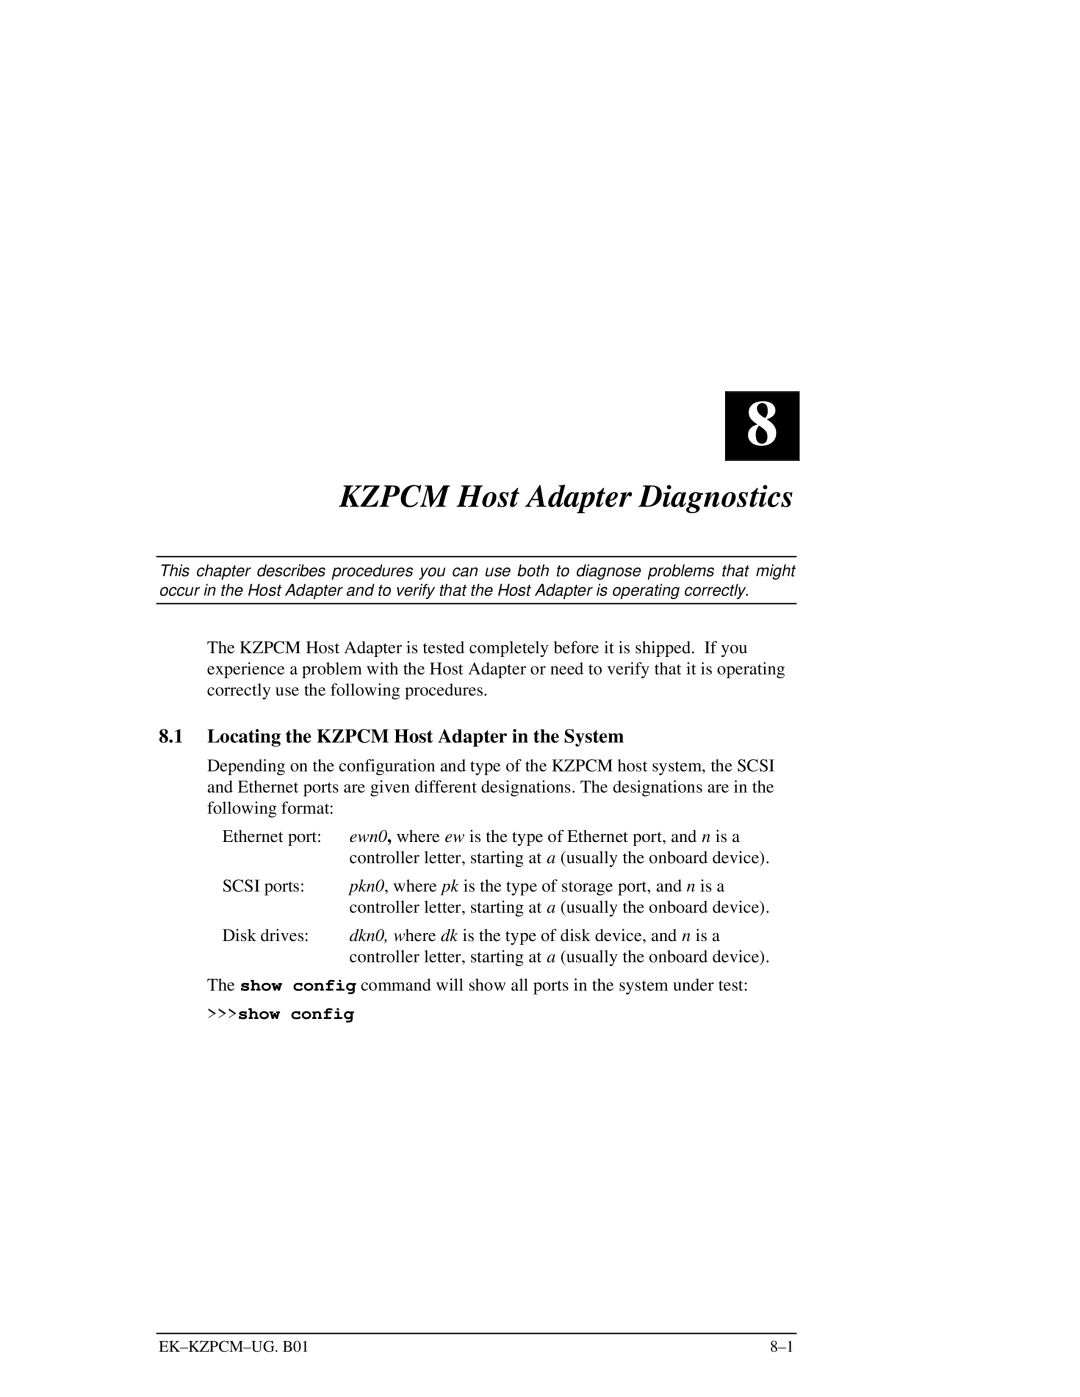 Intel EK-KZPCM-UG manual KZPCM Host Adapter Diagnostics, Locating the KZPCM Host Adapter in the System, show config 